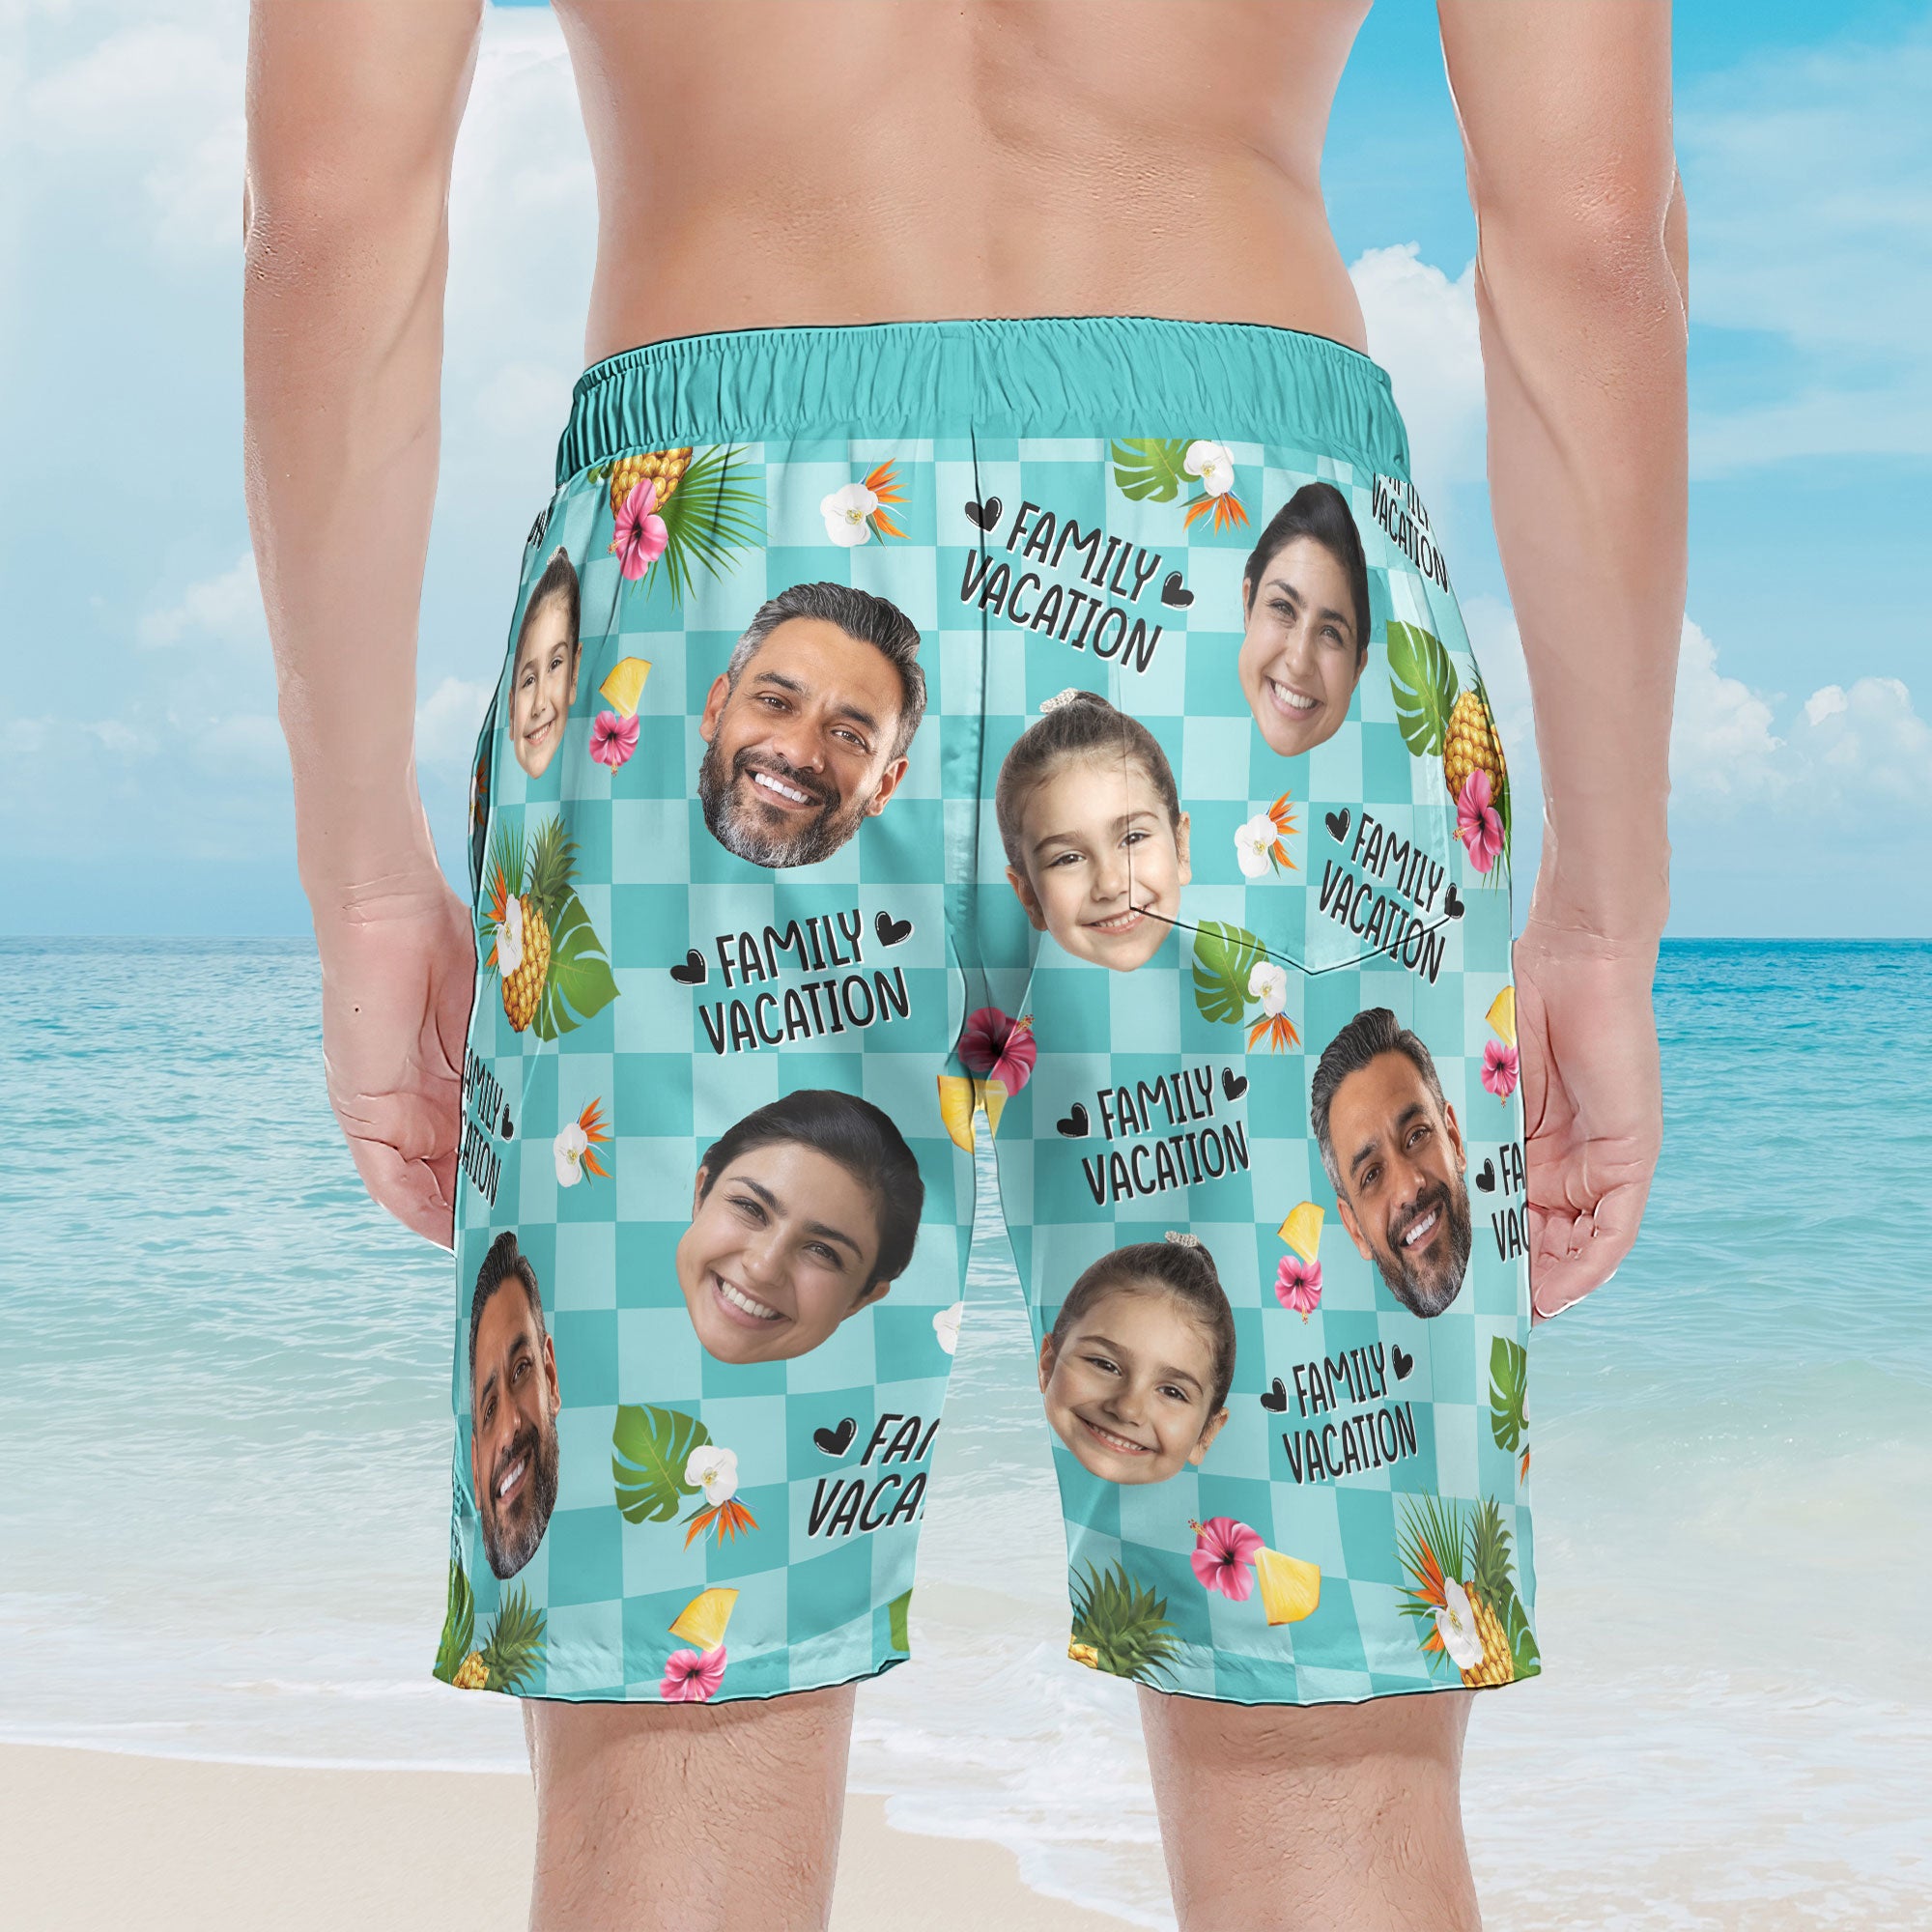 Family Vacation -  Personalized Photo Men's Beach Shorts